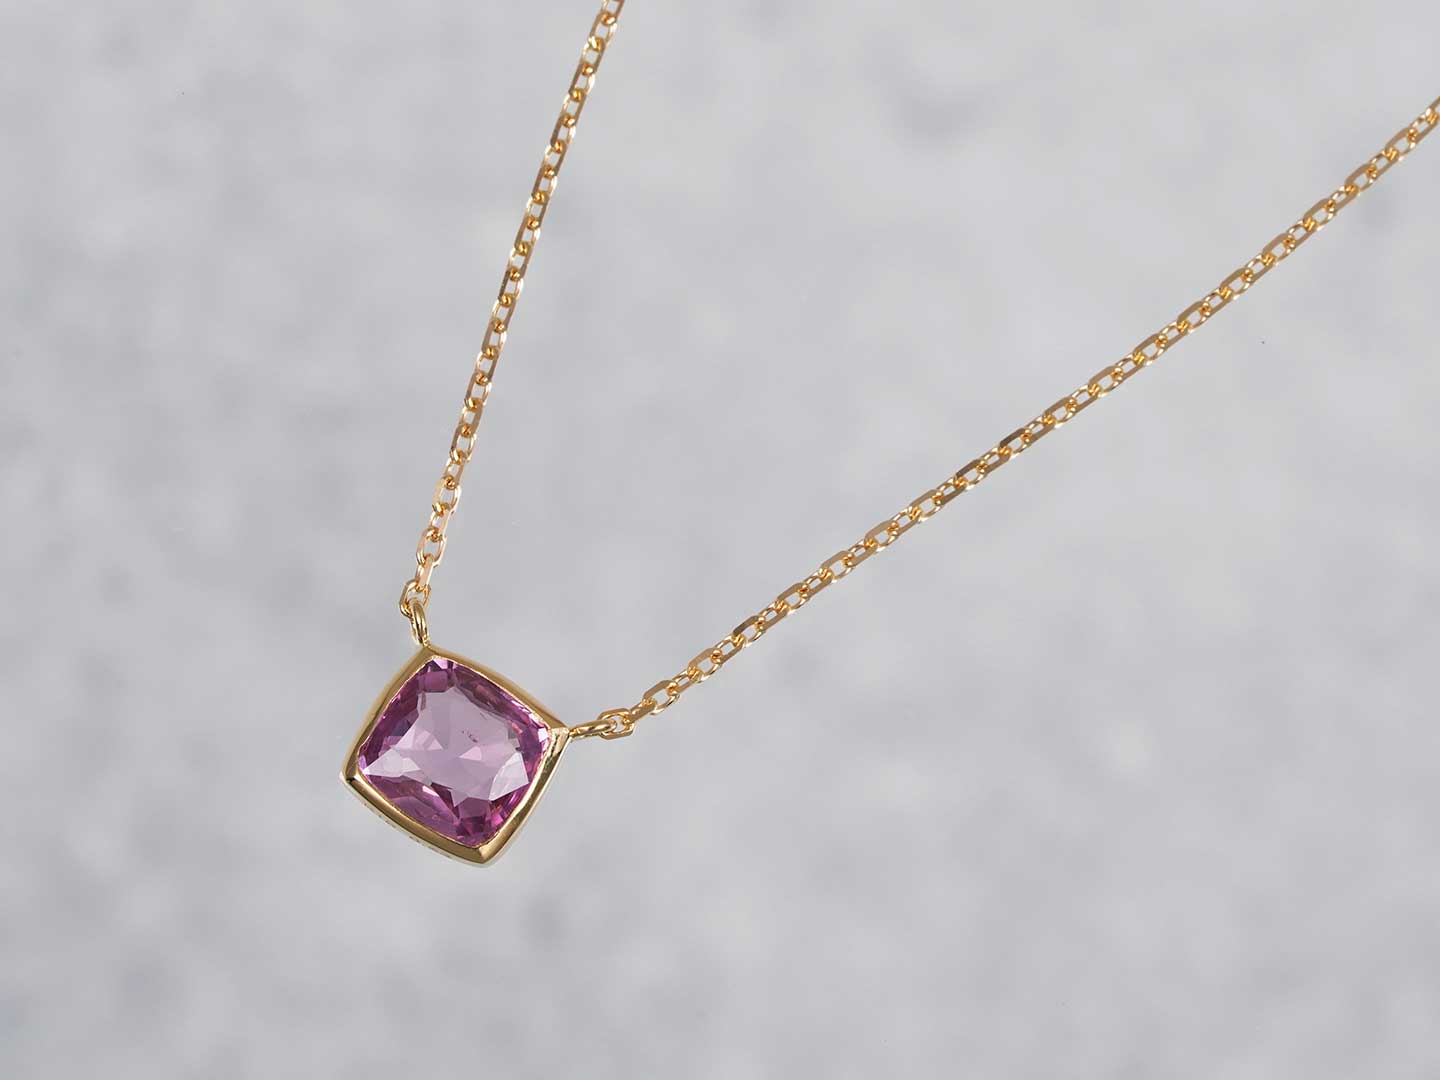 Pink spinel necklace 0.53 /ピンクスピネル | Hariqua-パワーストーン ...